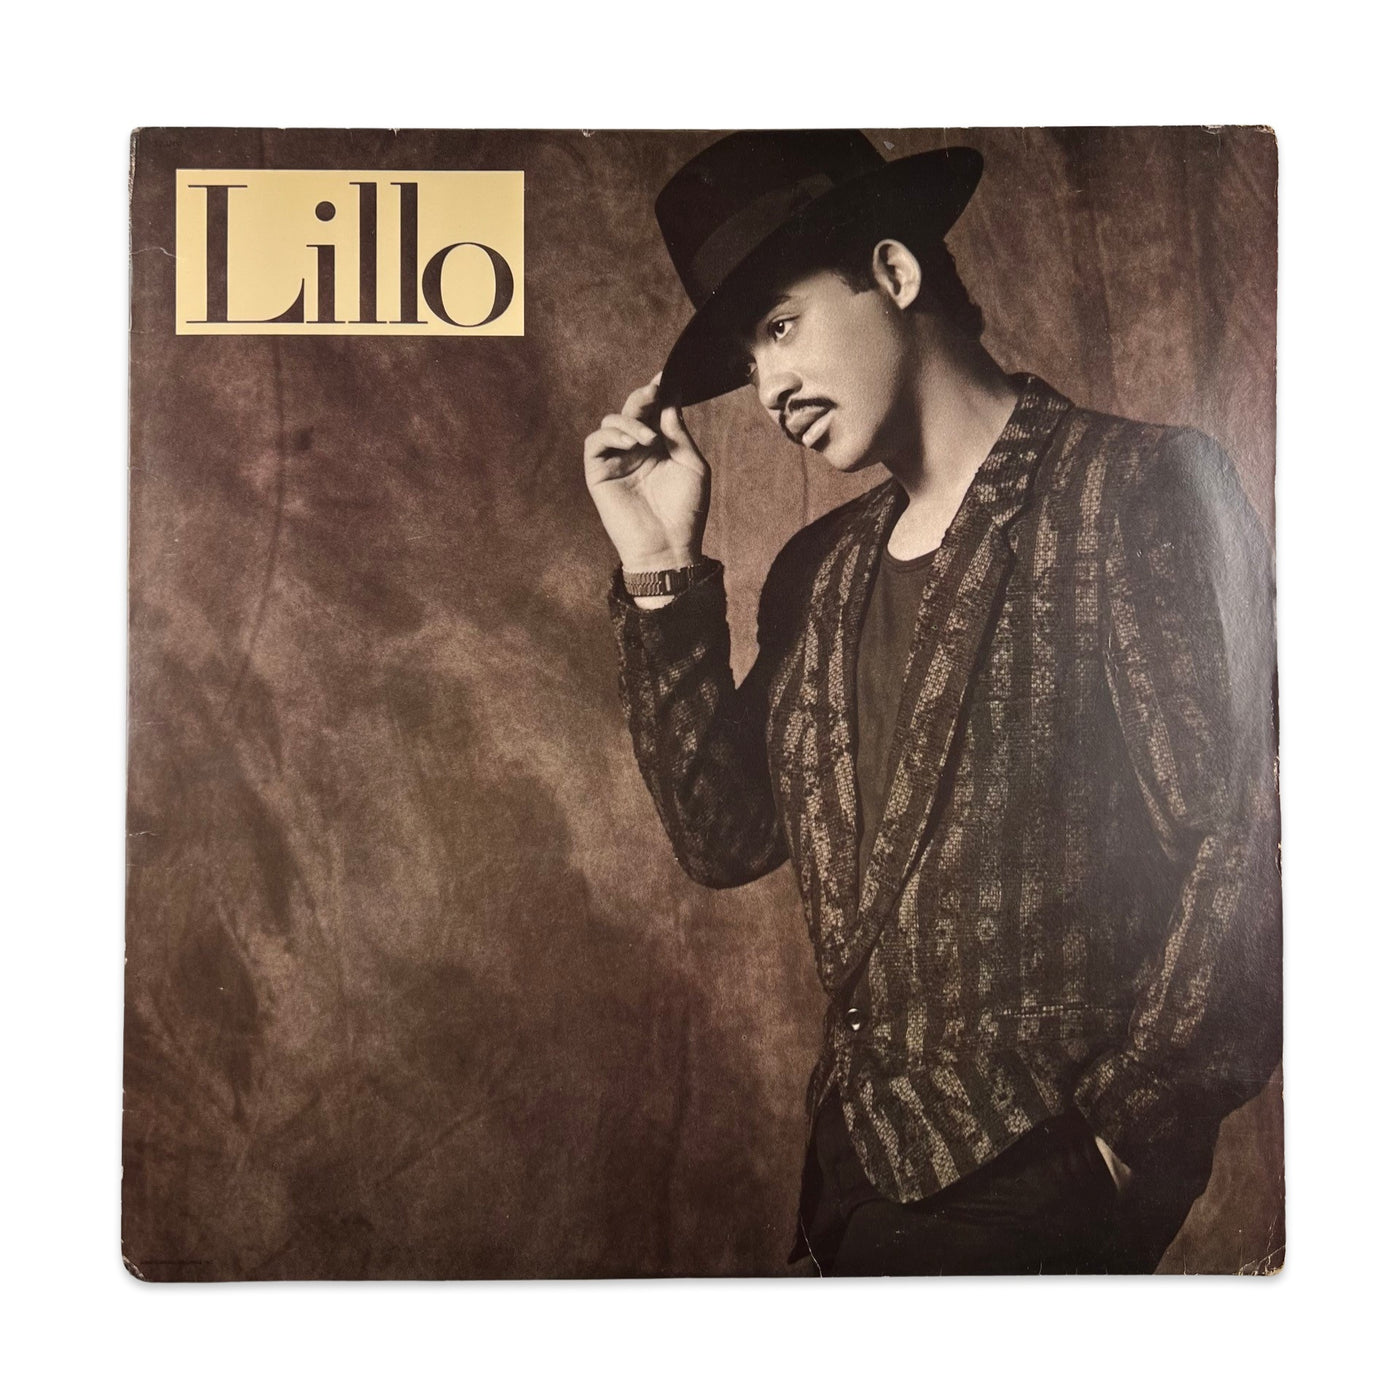 Lillo Thomas – Lillo